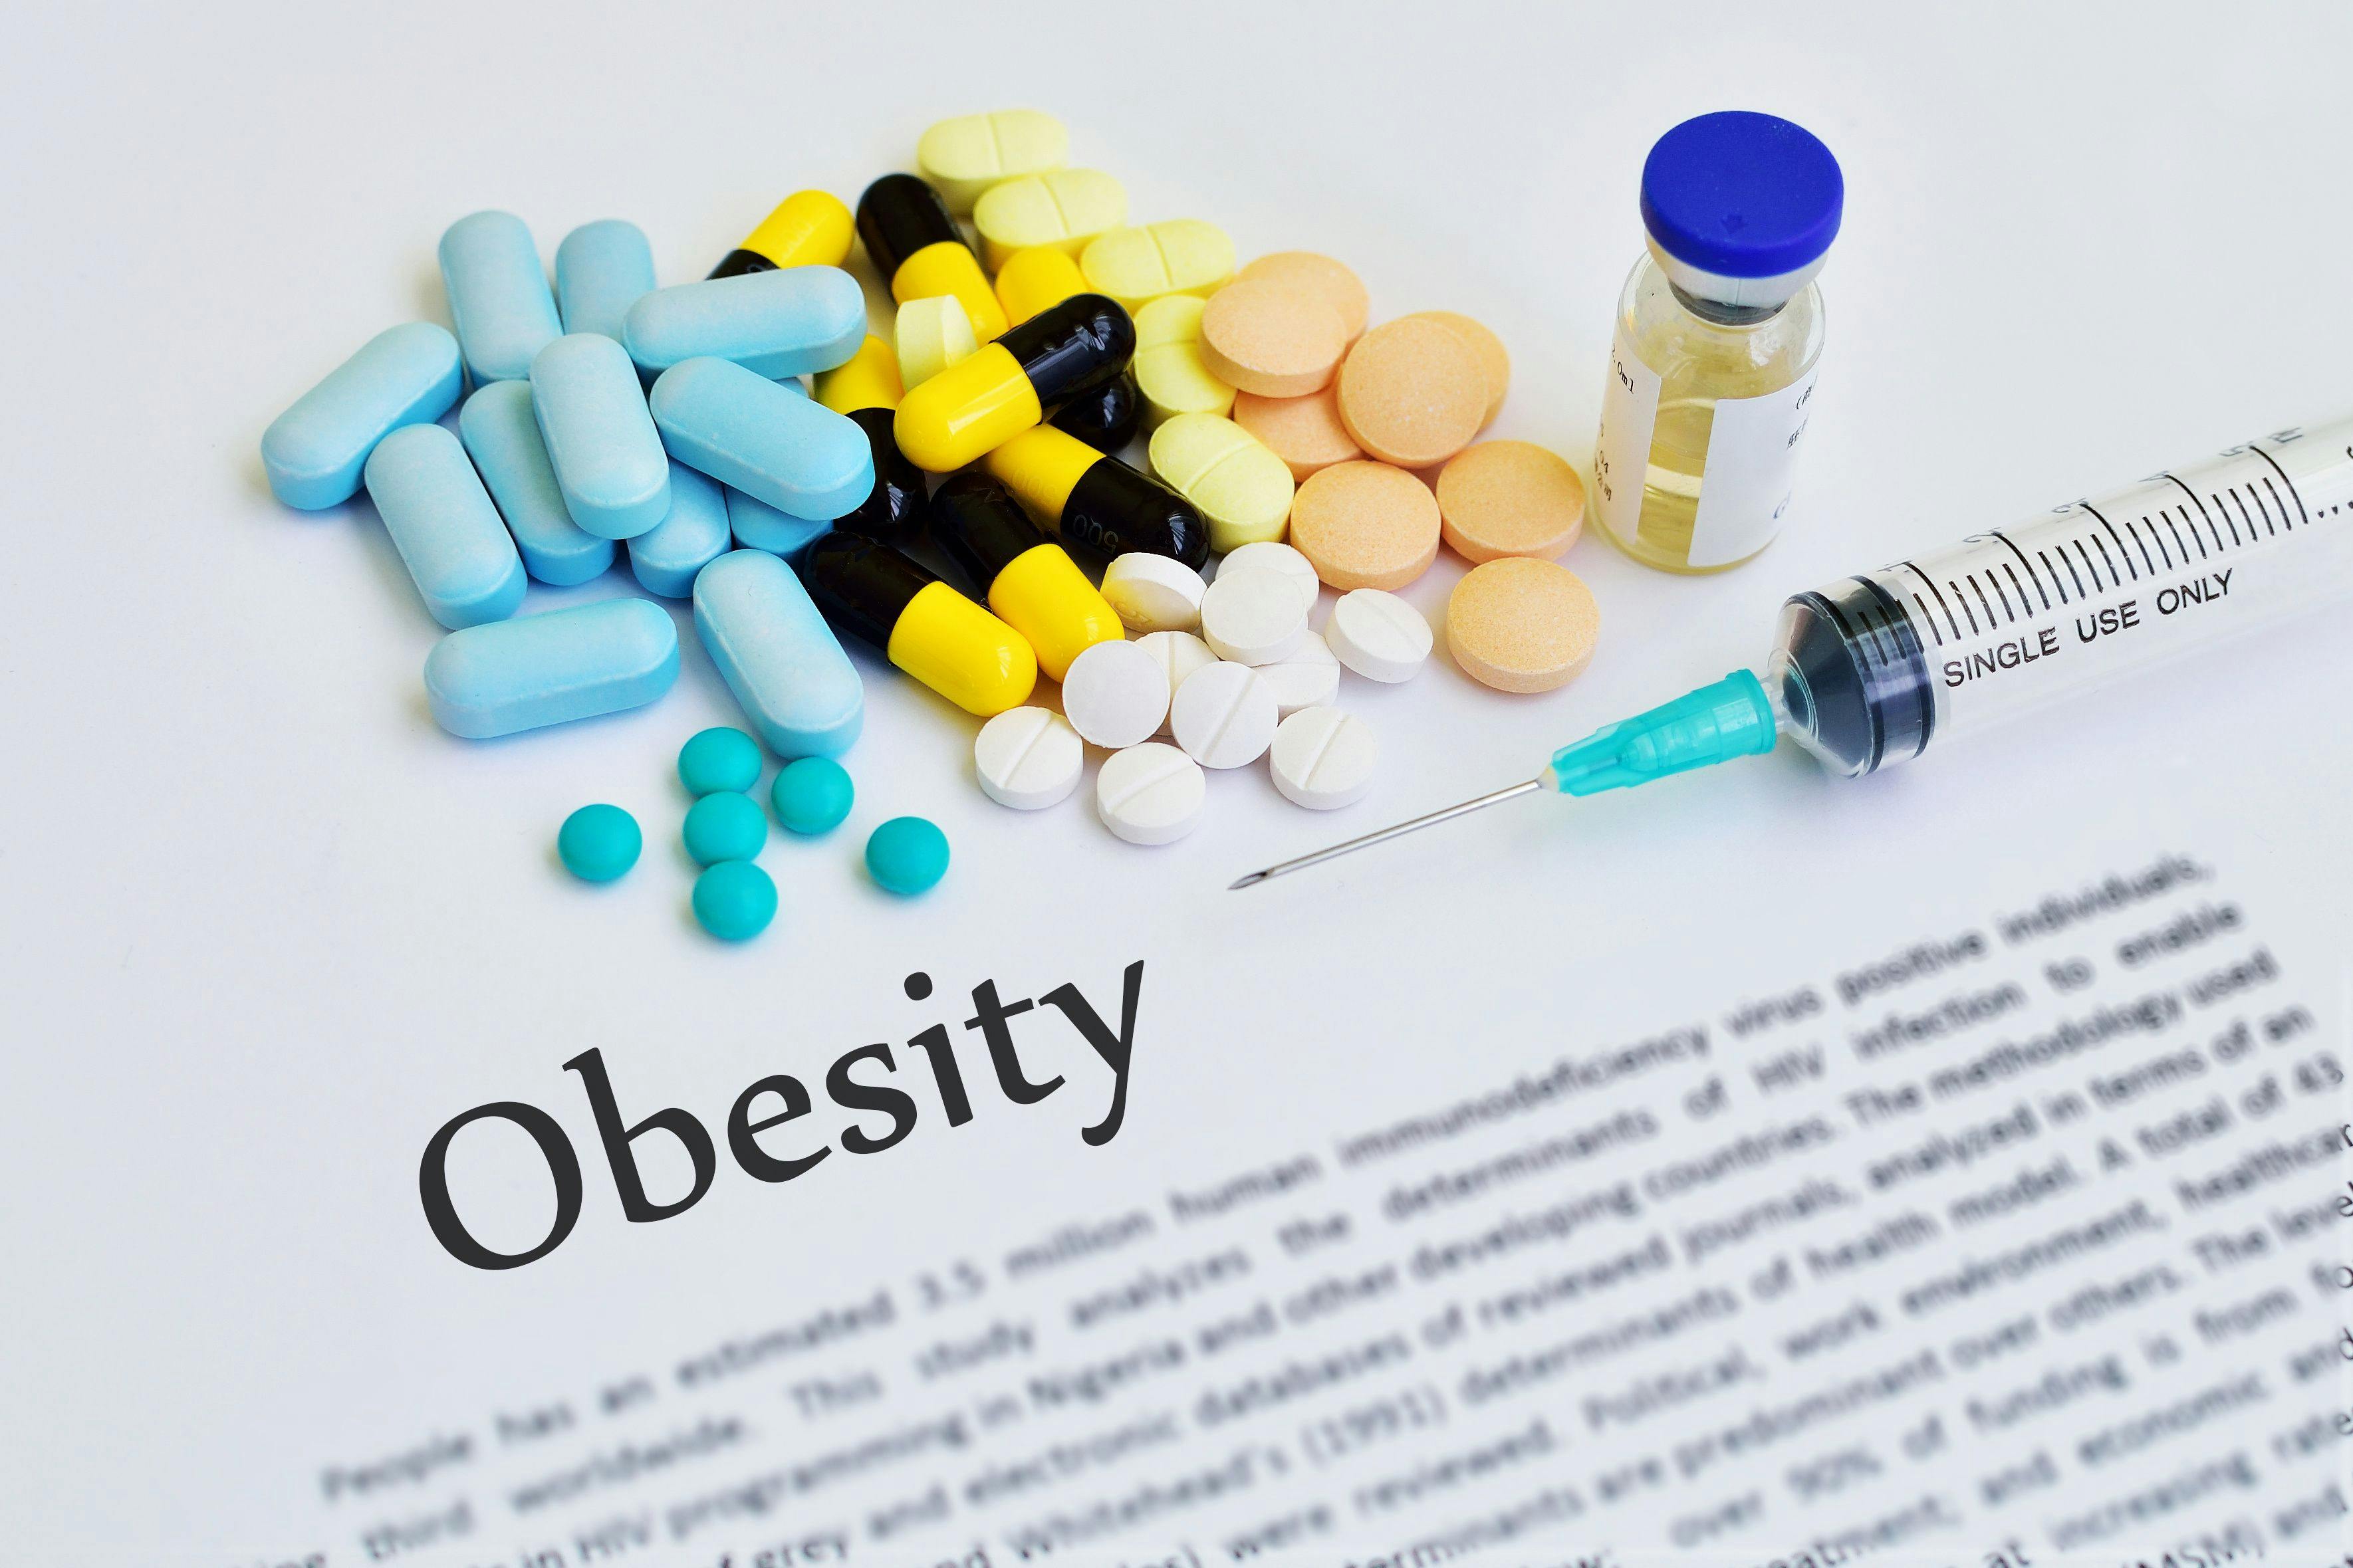 Drugs for obesity treatment - Image credit: Jarun011 | stock.adobe.com